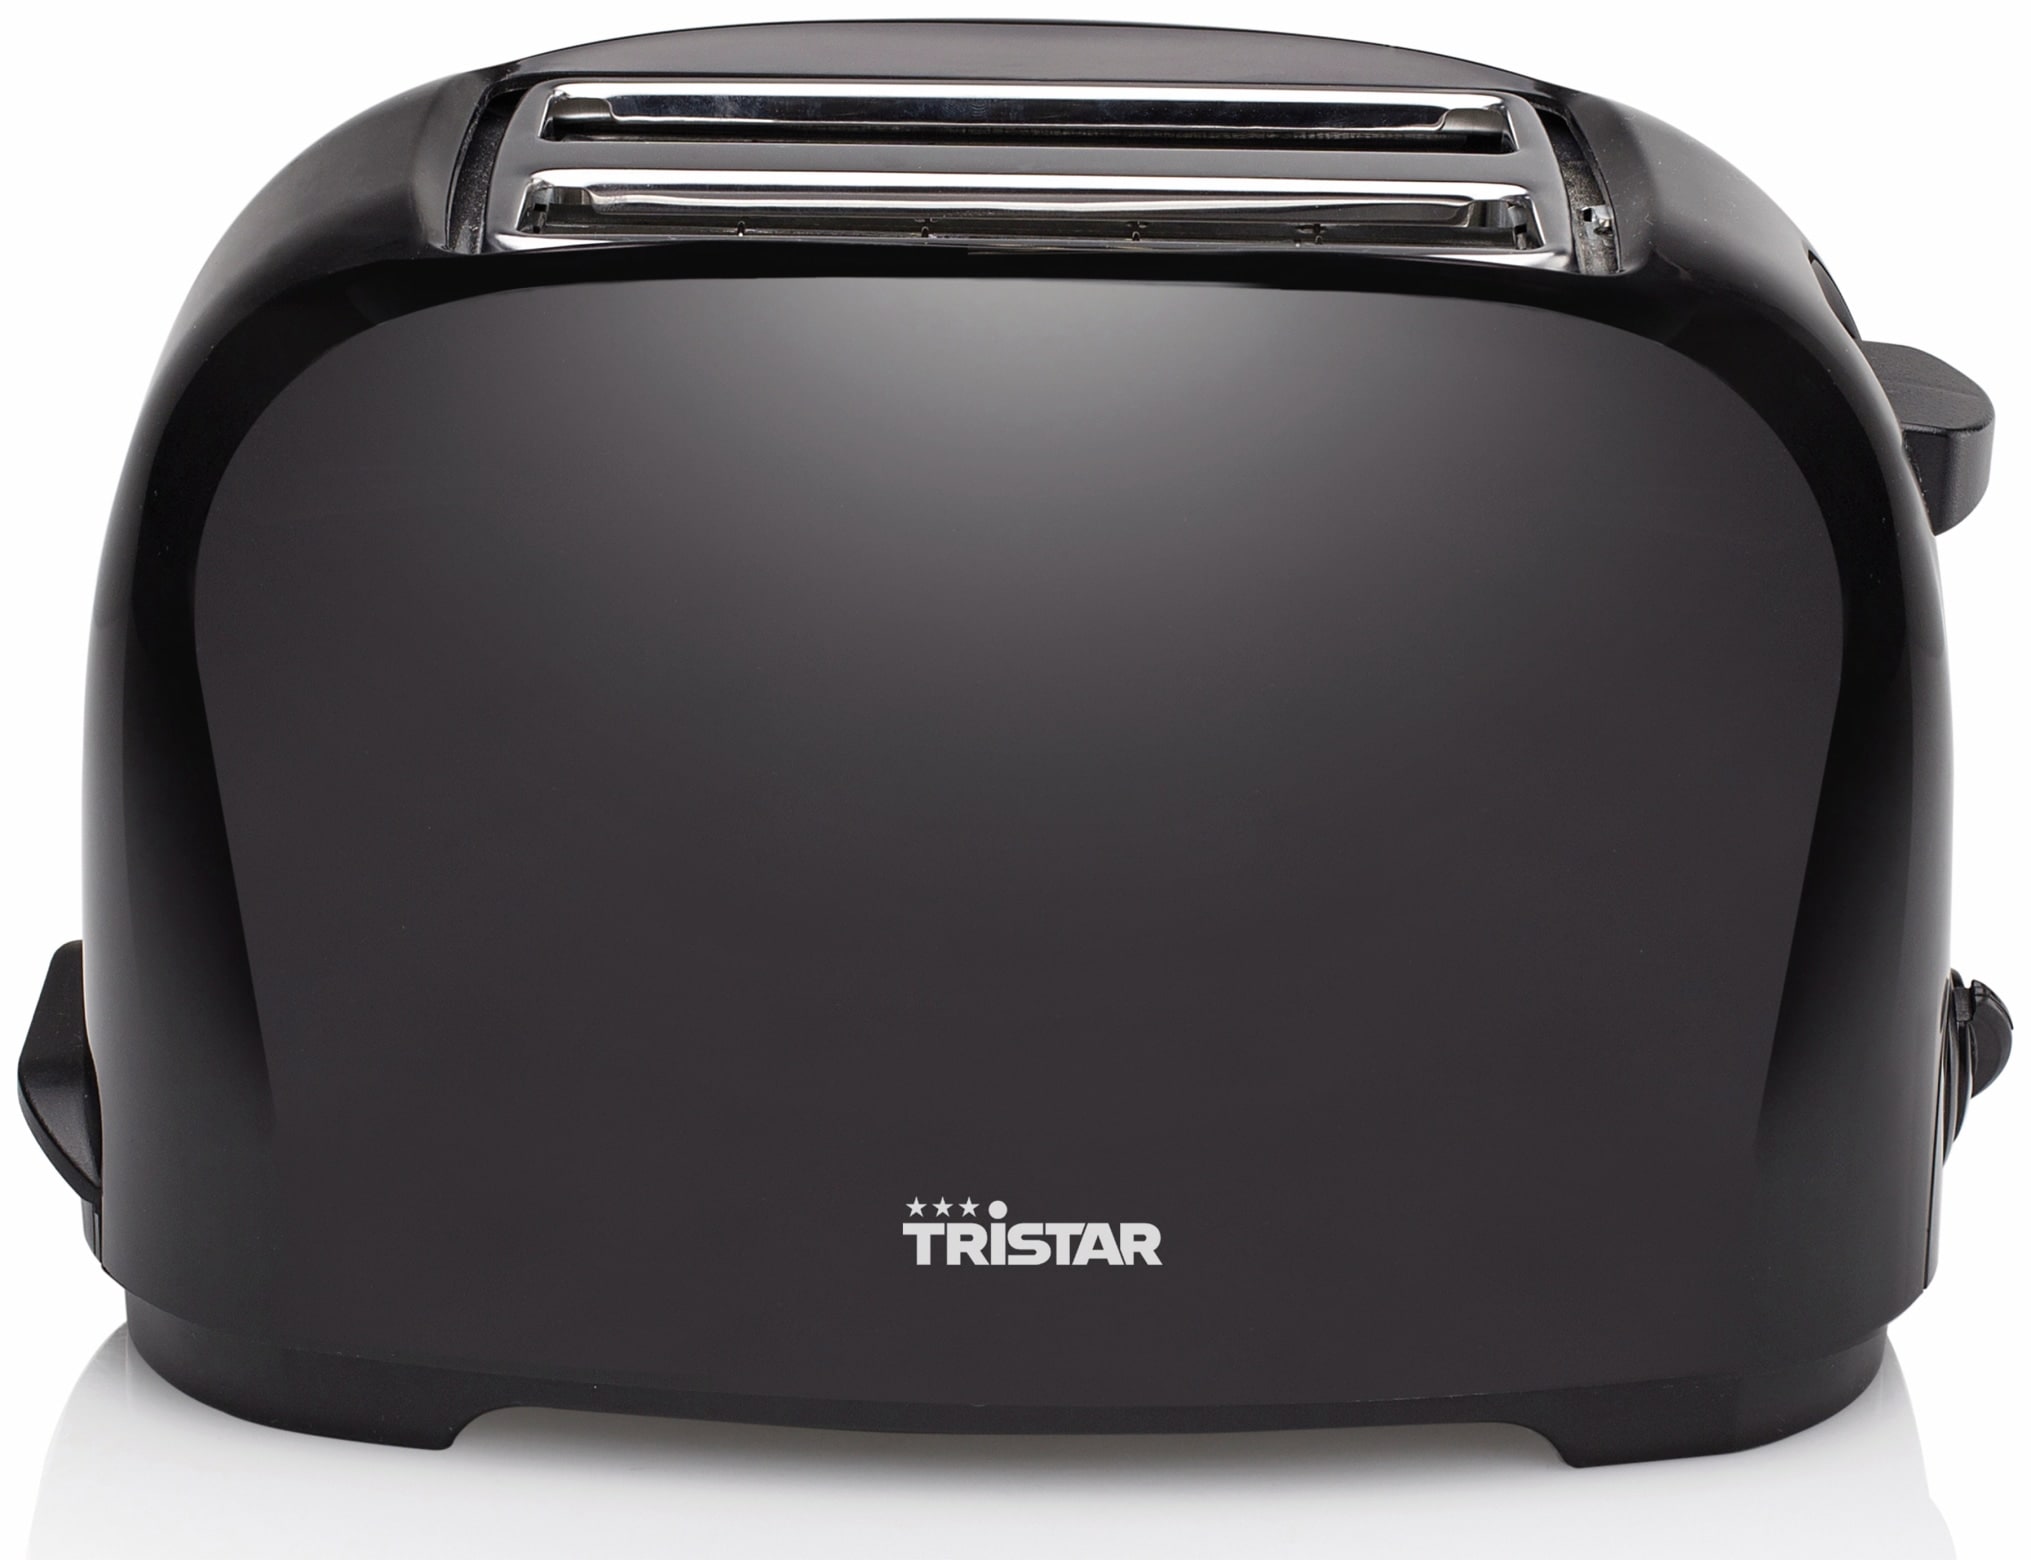 TRISTAR Toaster BR-1025, 800 W